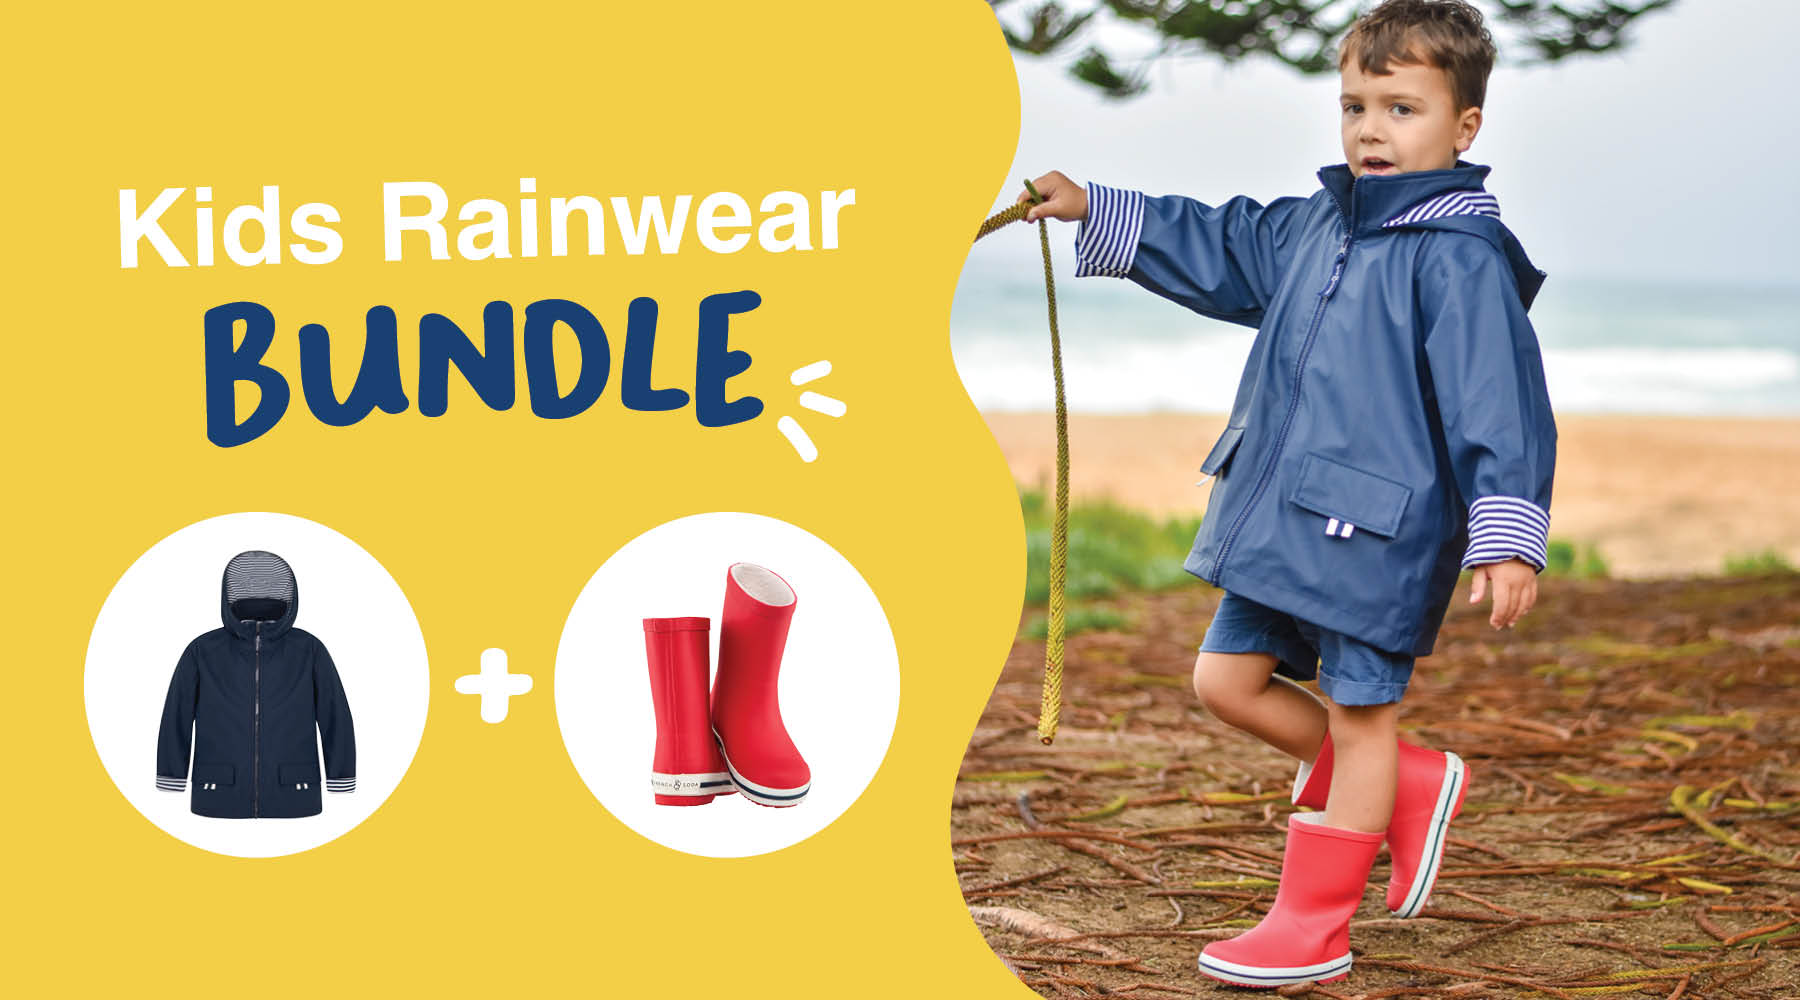 Kids raincoats and gumboots bundles